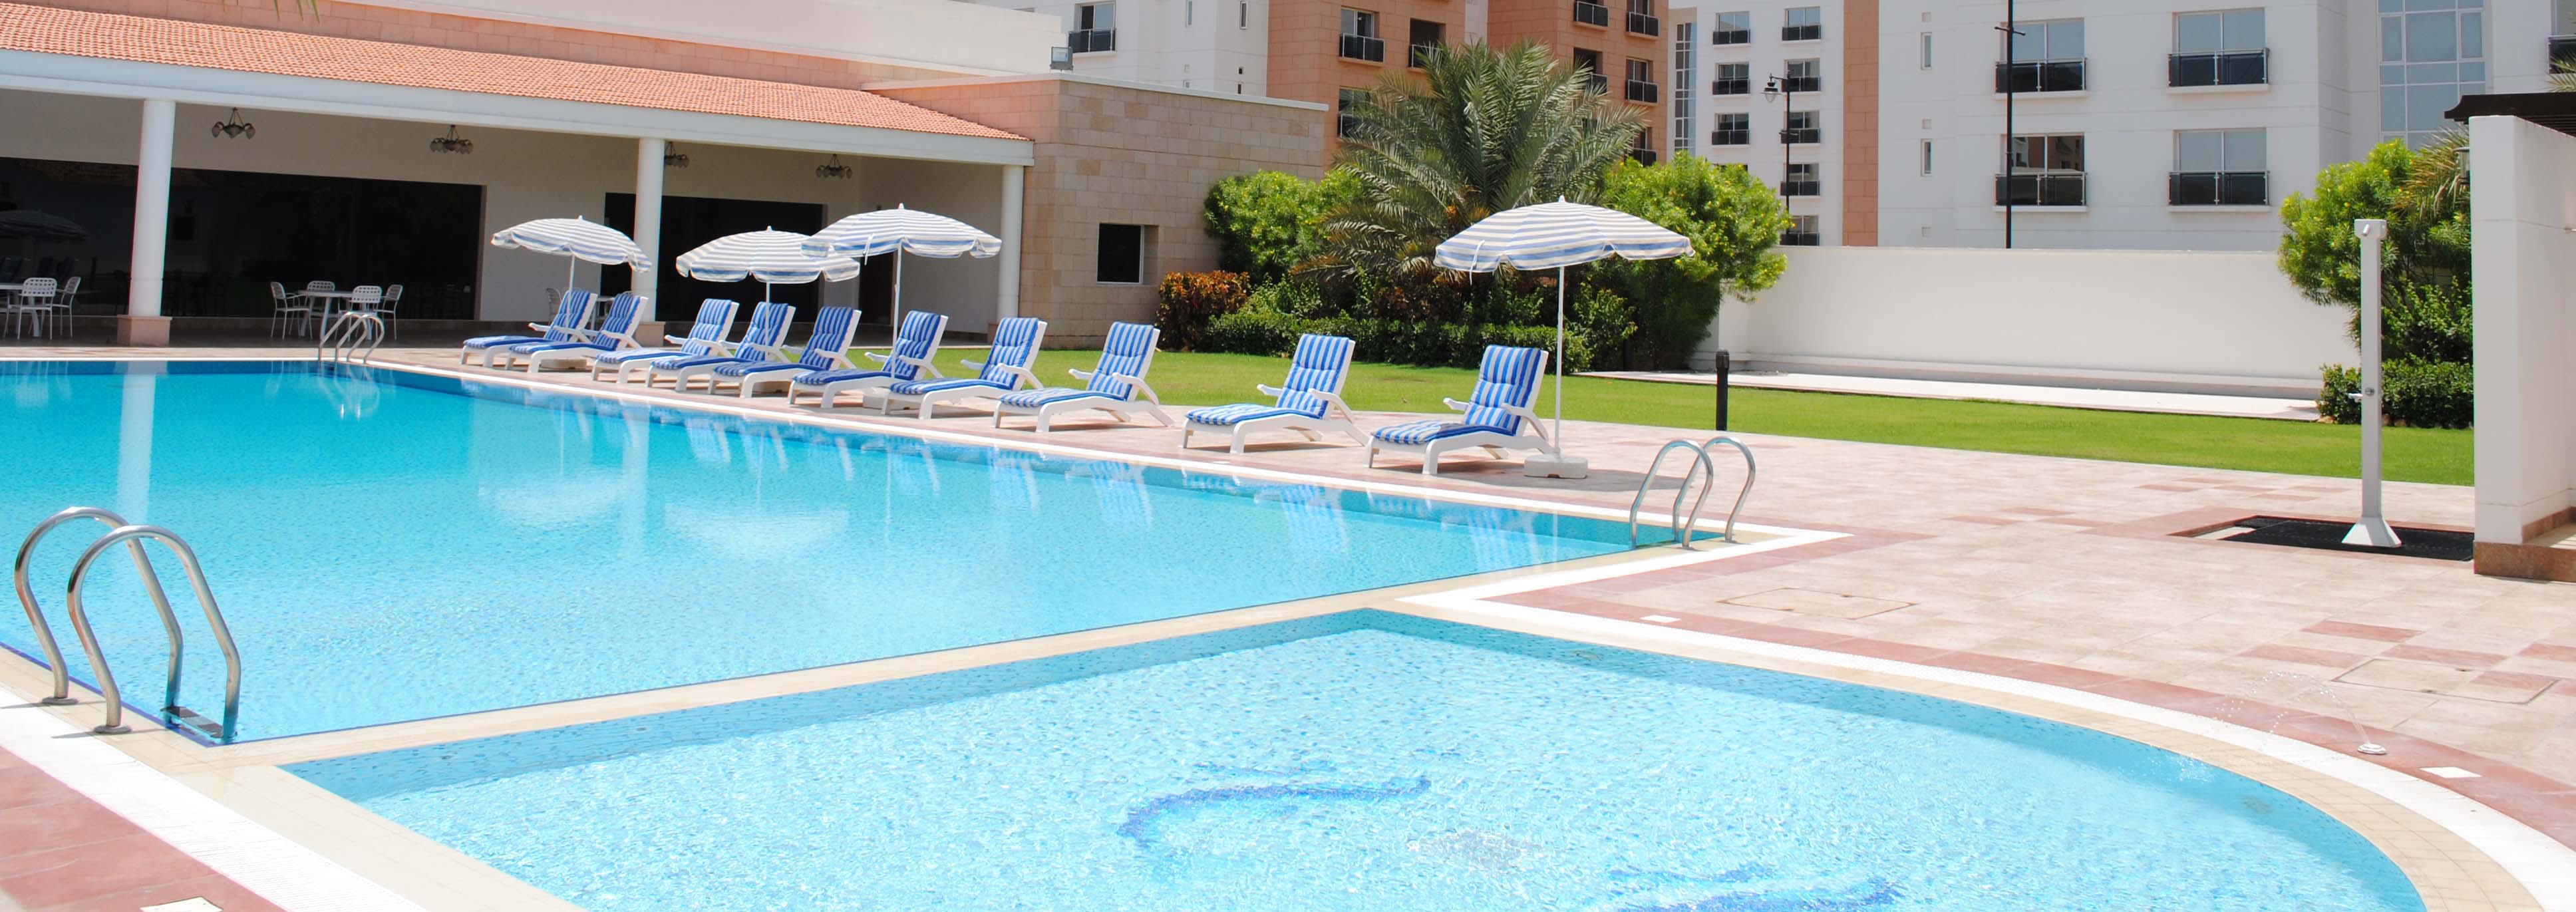 Palm Garden swimming pool